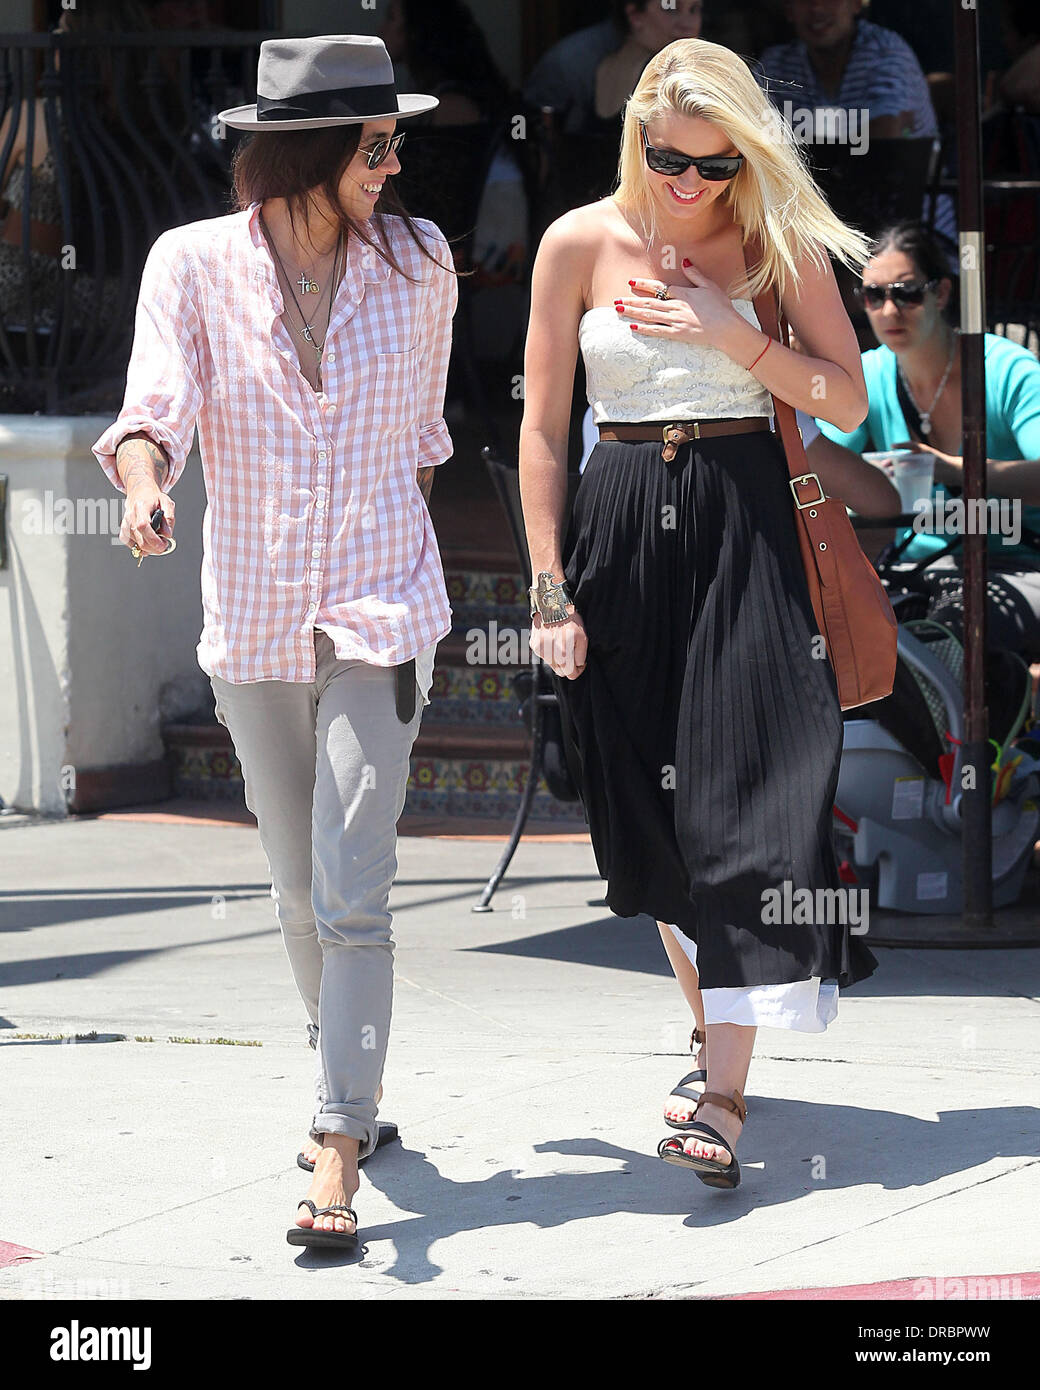 Amber Heard and Tasya Van Ree  leaving Urth caffe after having lunch  Los Angeles, California - 11.07.12 Stock Photo